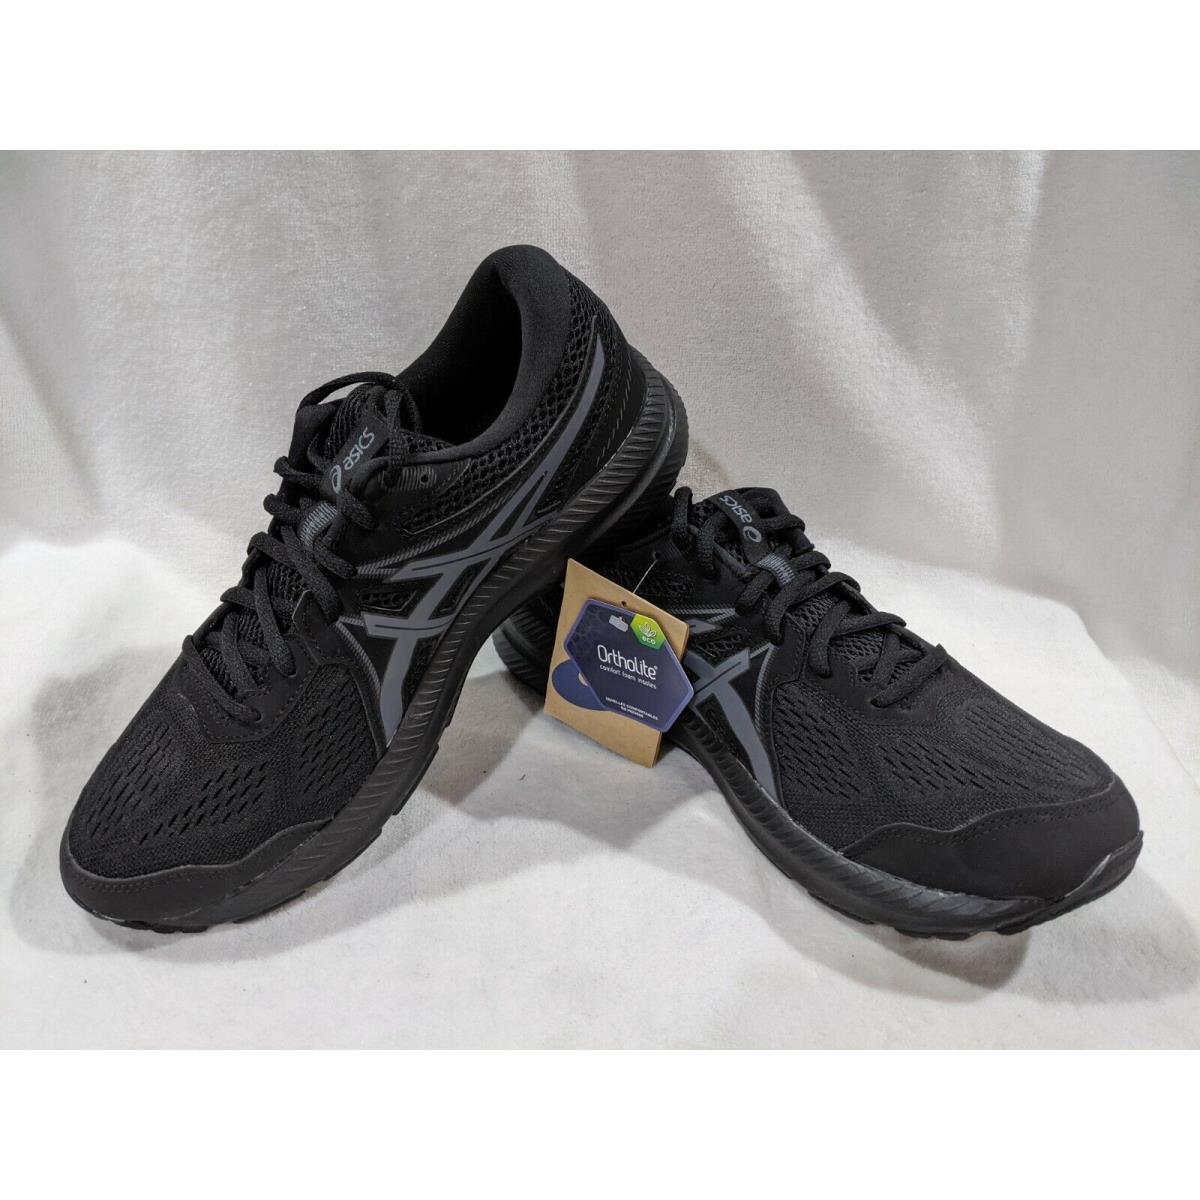 Asics Men`s Gel-contend 7 Black/grey Running Shoes - Size 8.5 X-wide 4E